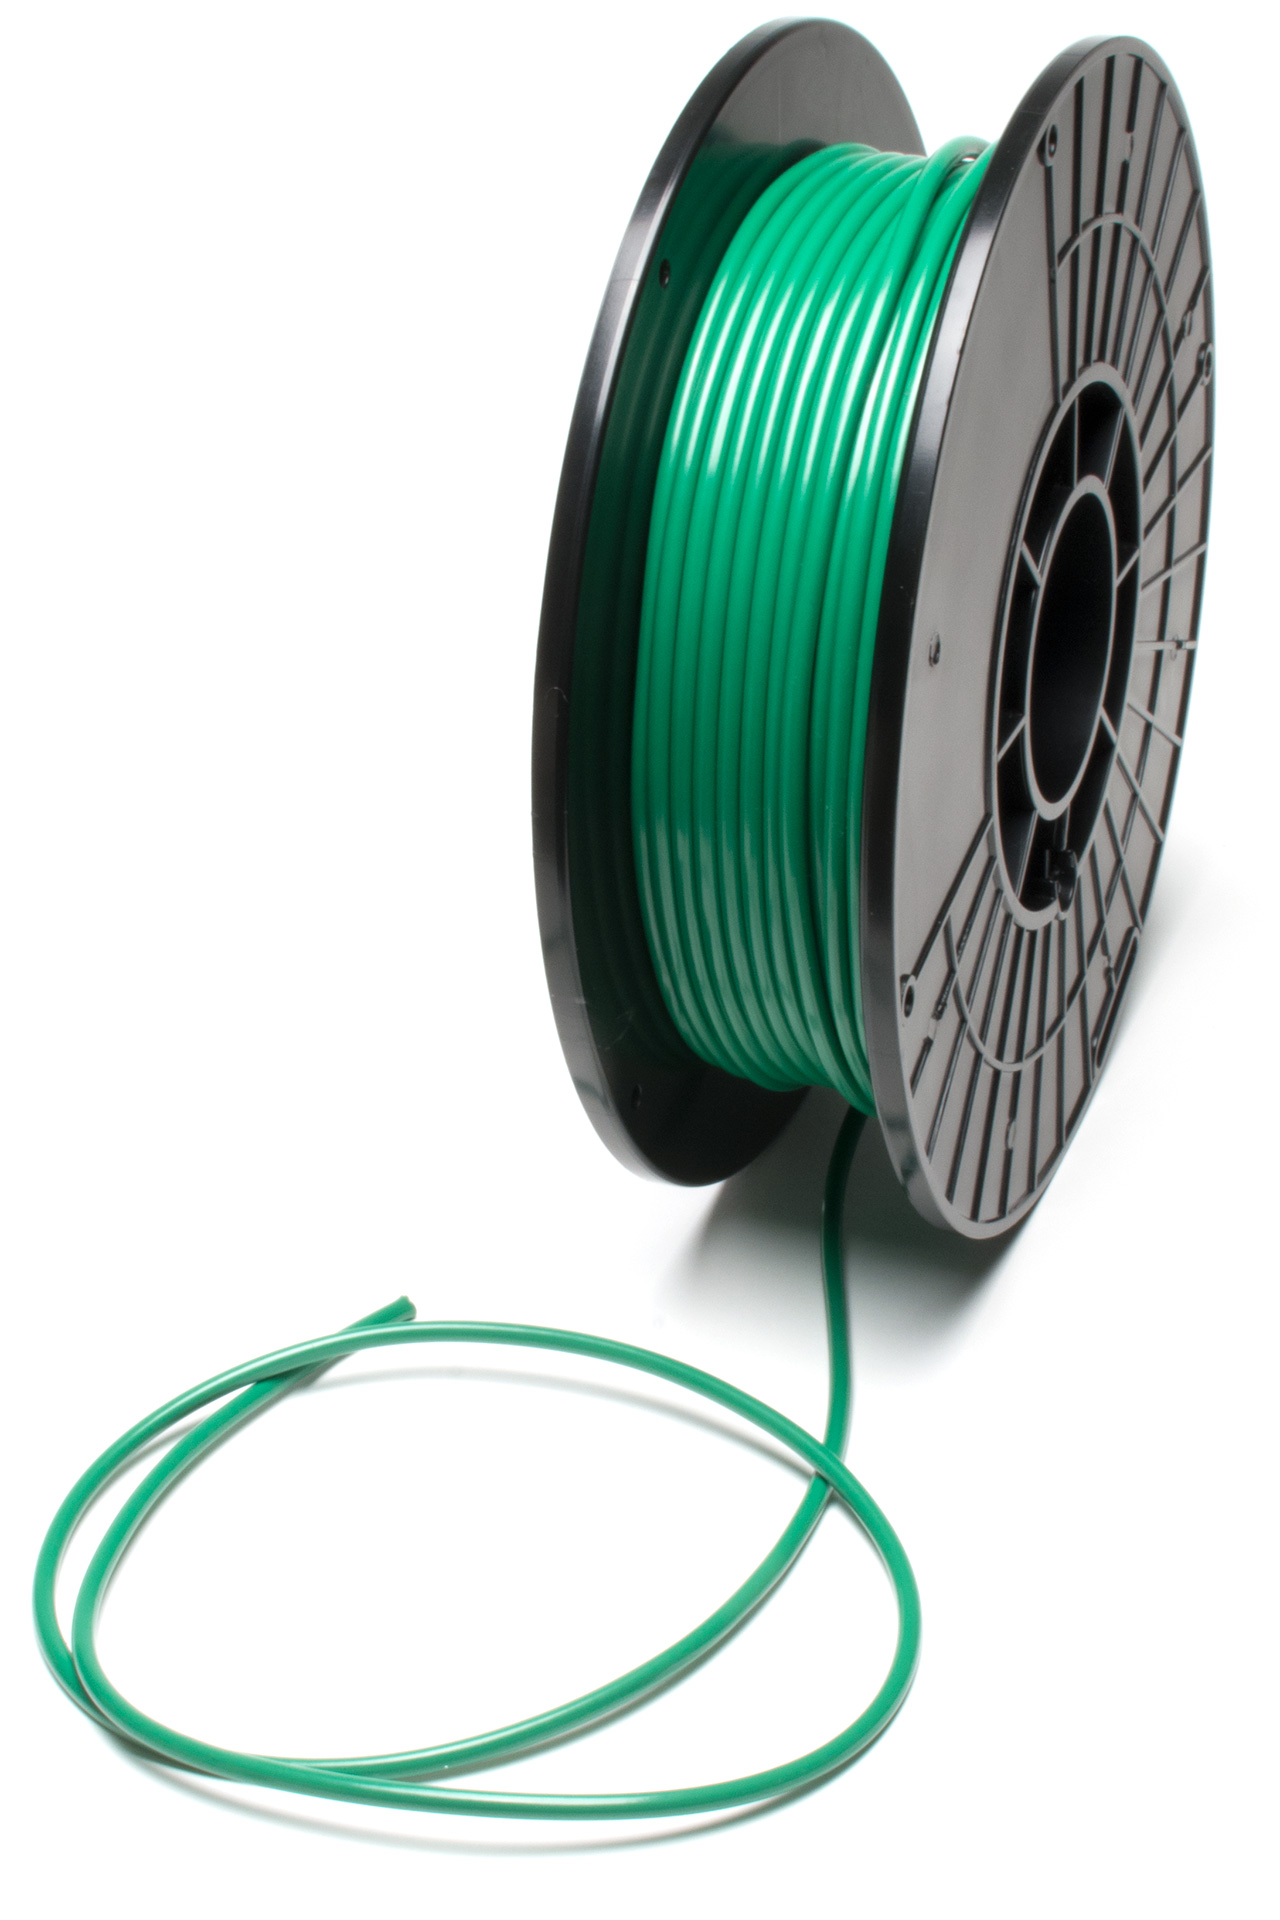 Transit welding cord in green